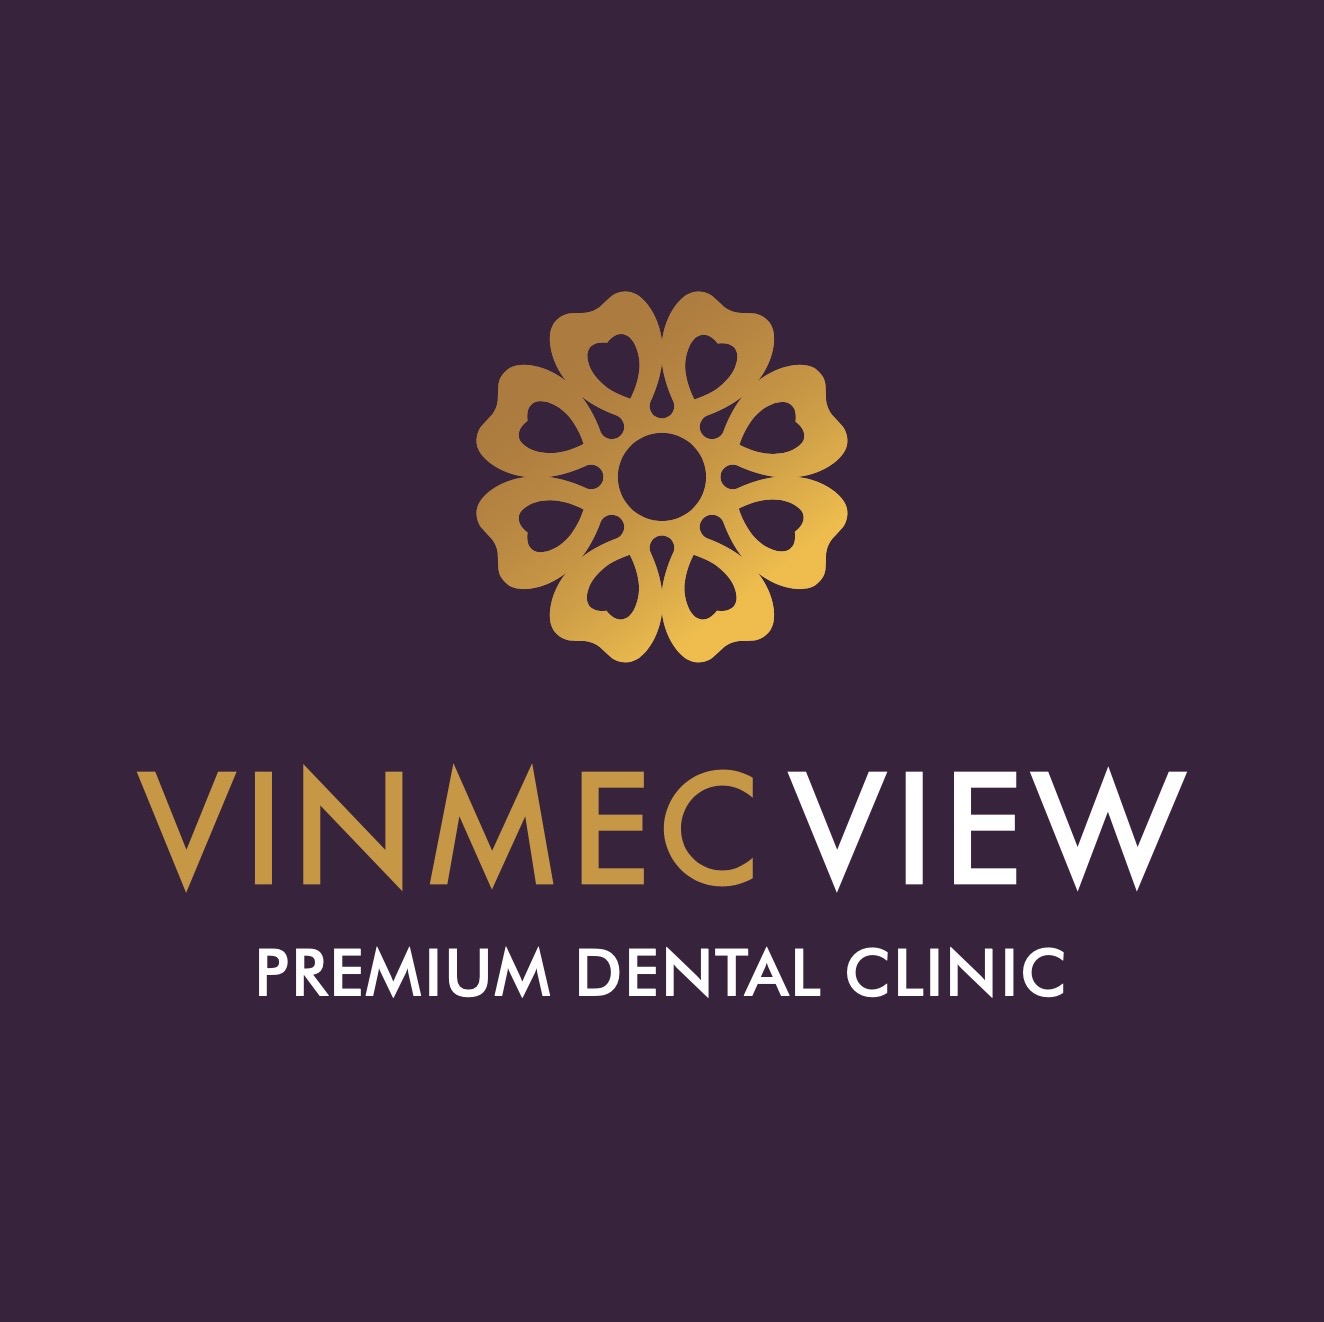 Vinmec View Premium Dental Clinic